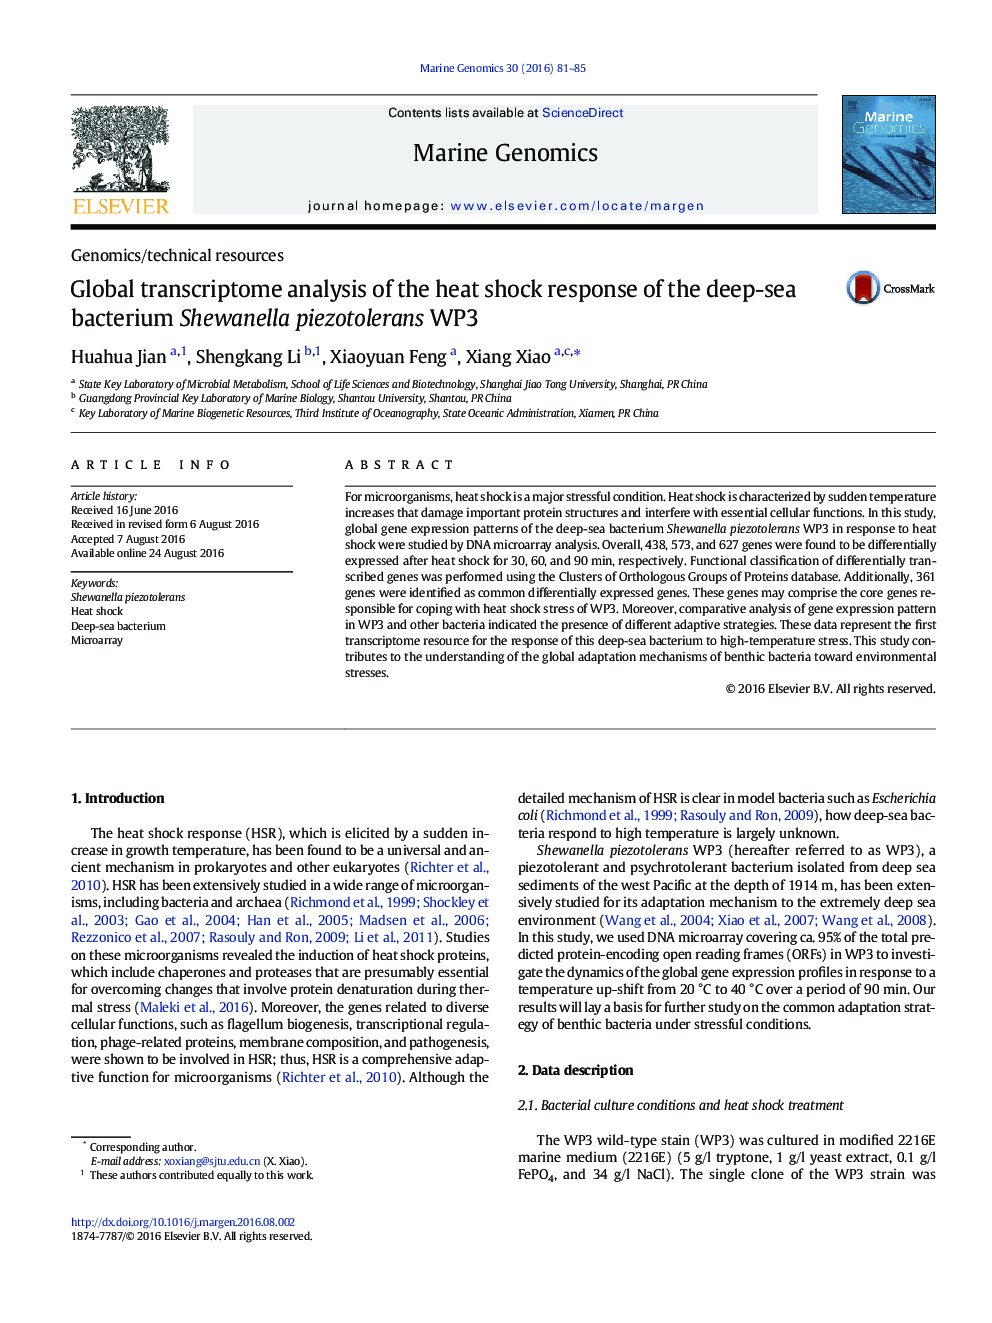 Genomics/technical resourcesGlobal transcriptome analysis of the heat shock response of the deep-sea bacterium Shewanella piezotolerans WP3